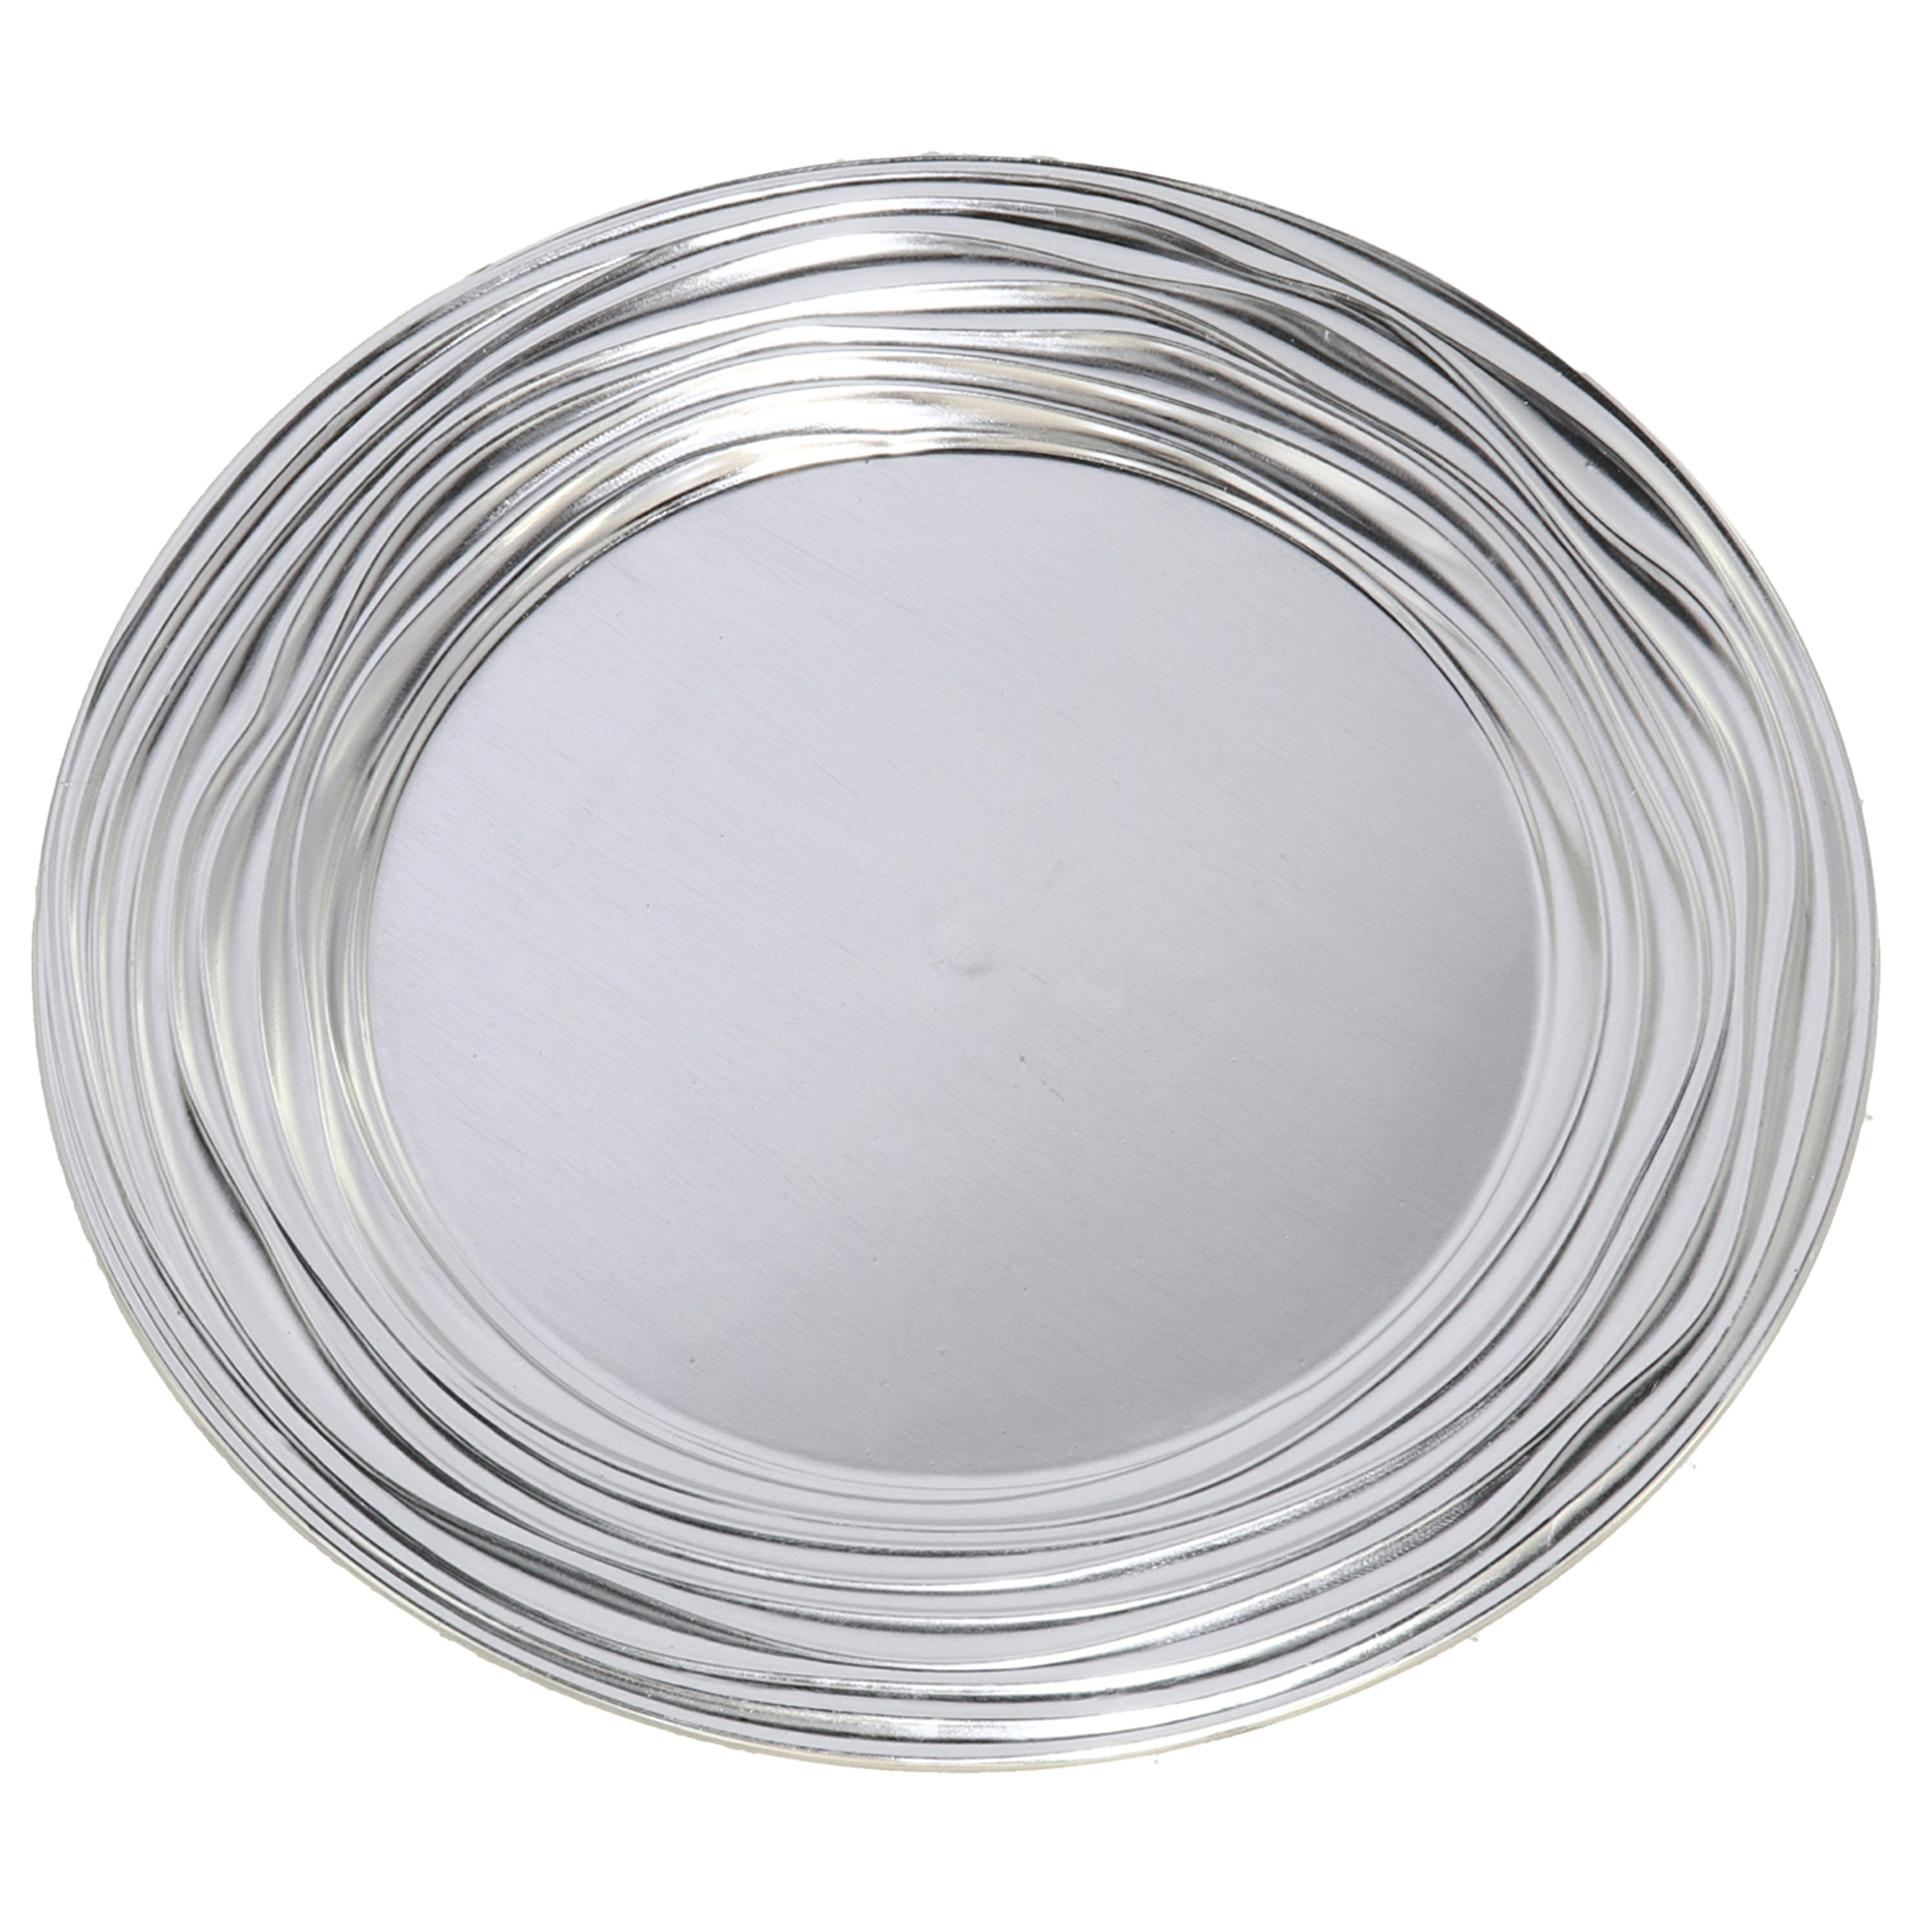 Ronde diner onderborden-kaarsenbord-plateau glimmend zilver van 33 cm